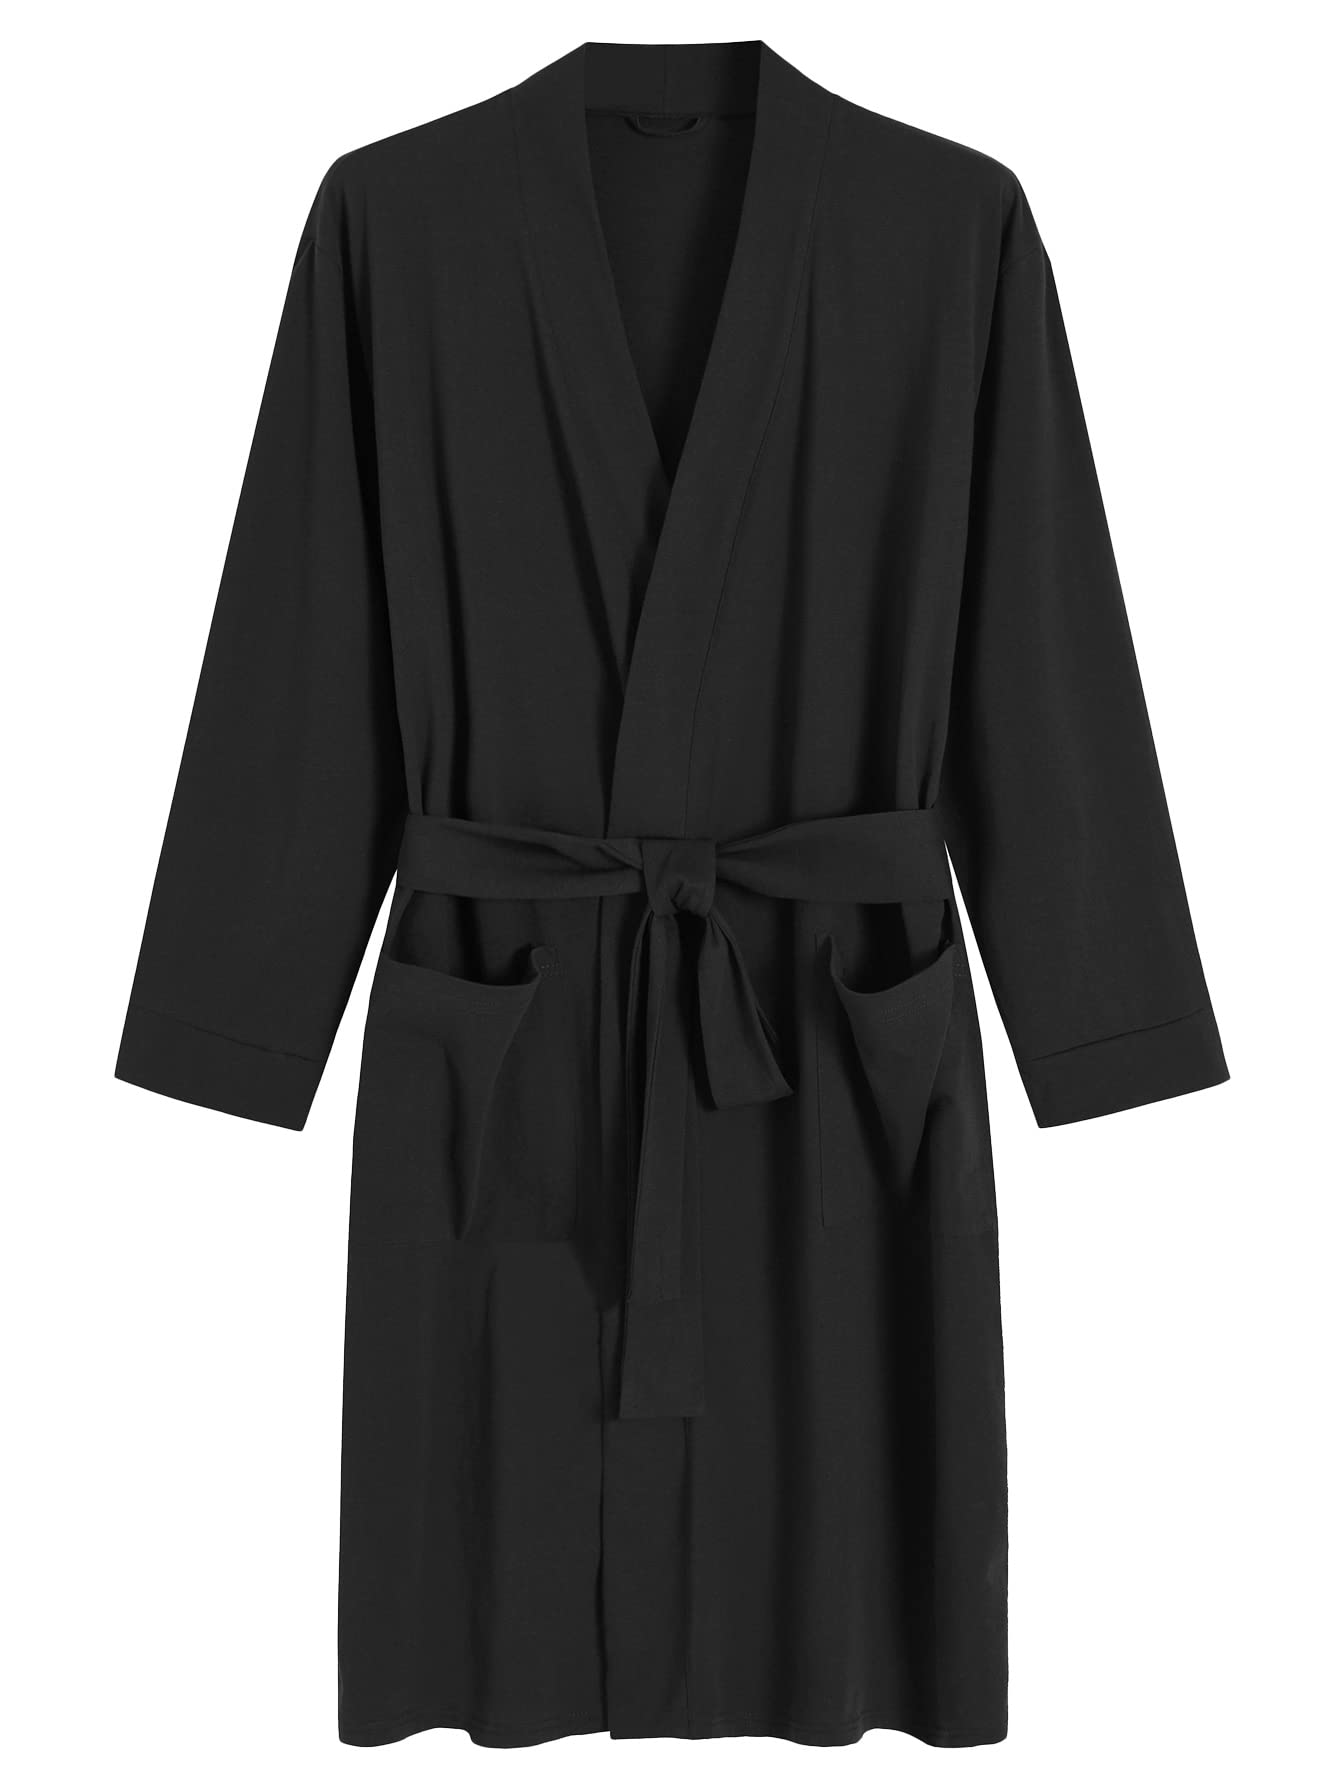 Men's Cotton Kimono Robe Lightweight Bathrobe - Latuza